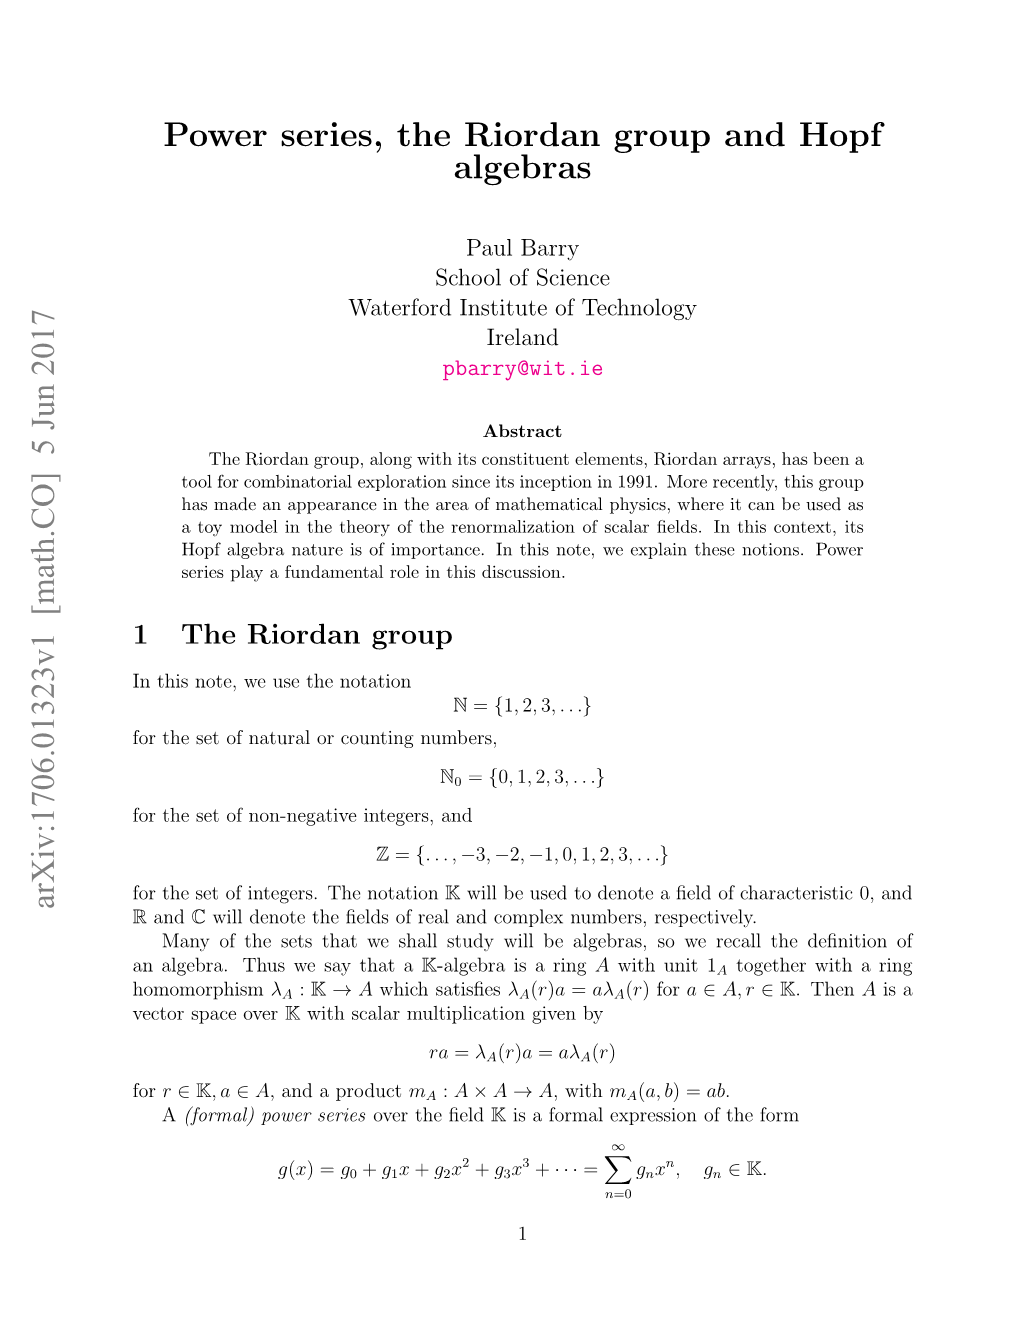 Power Series, the Riordan Group and Hopf Algebras